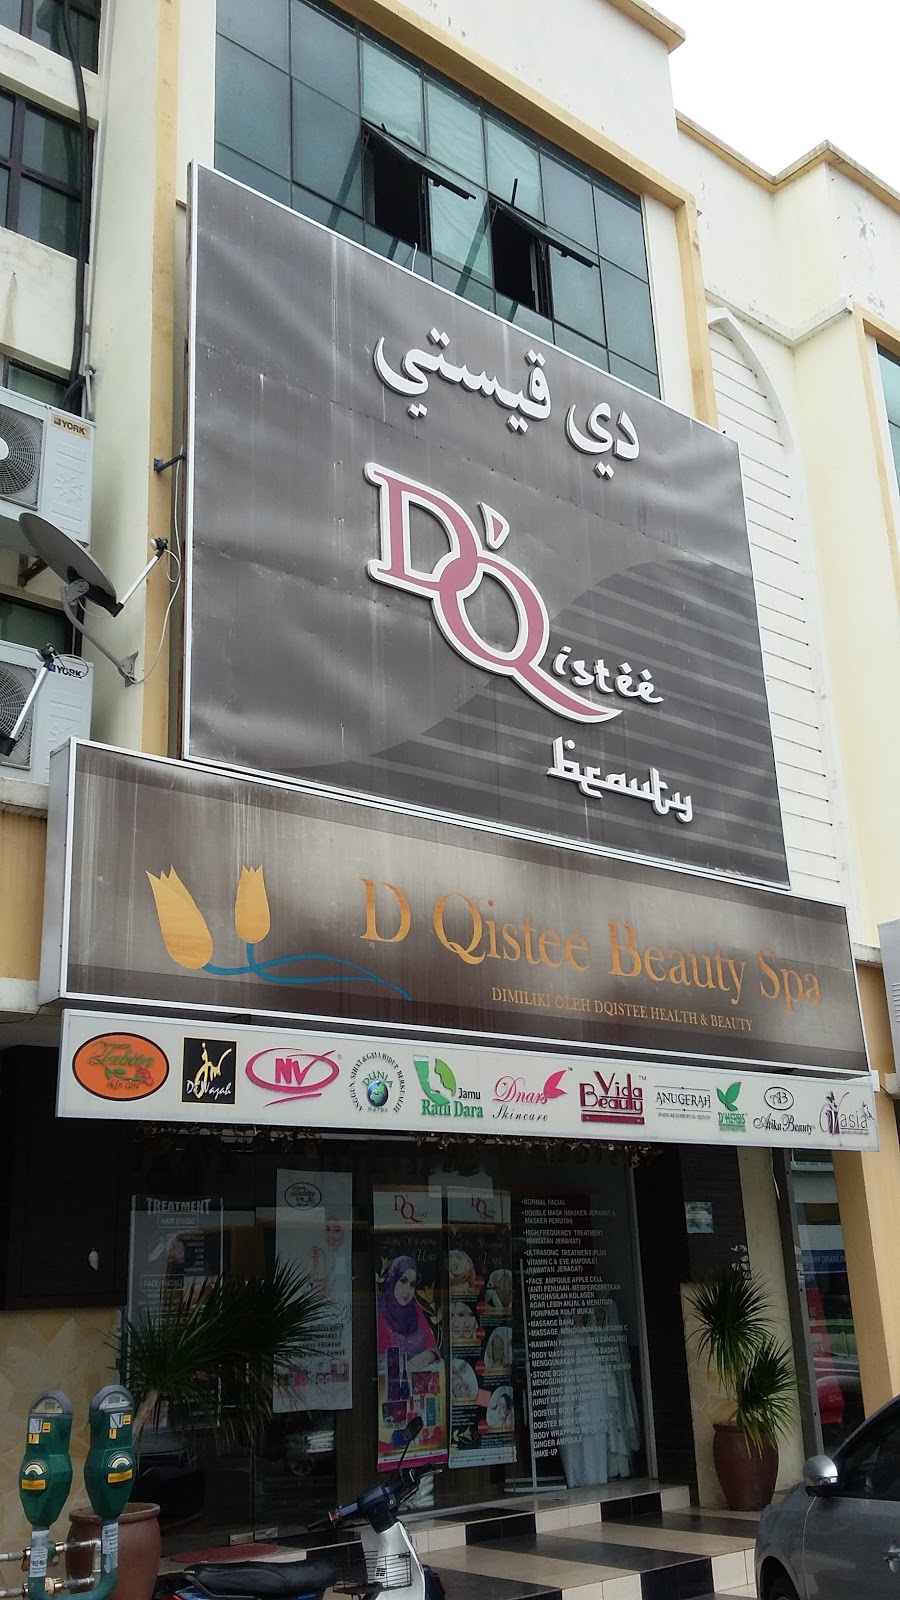 D Qistee Beauty Spa